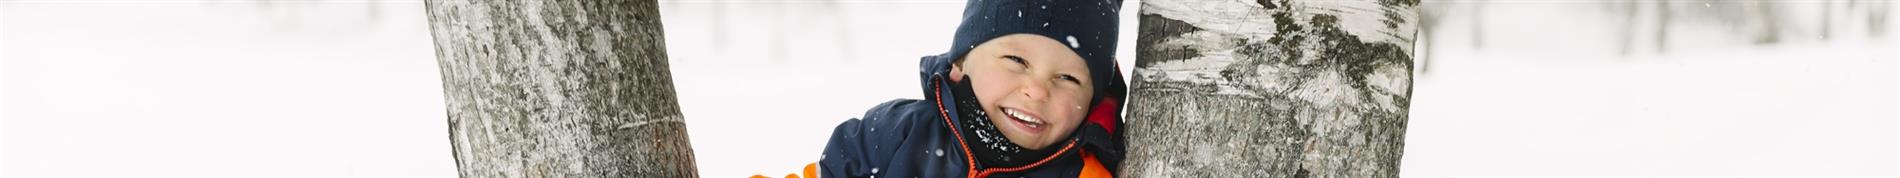 Boys’ Snowboard Coats Keeping Kids Warm on the Mountain Slopes 